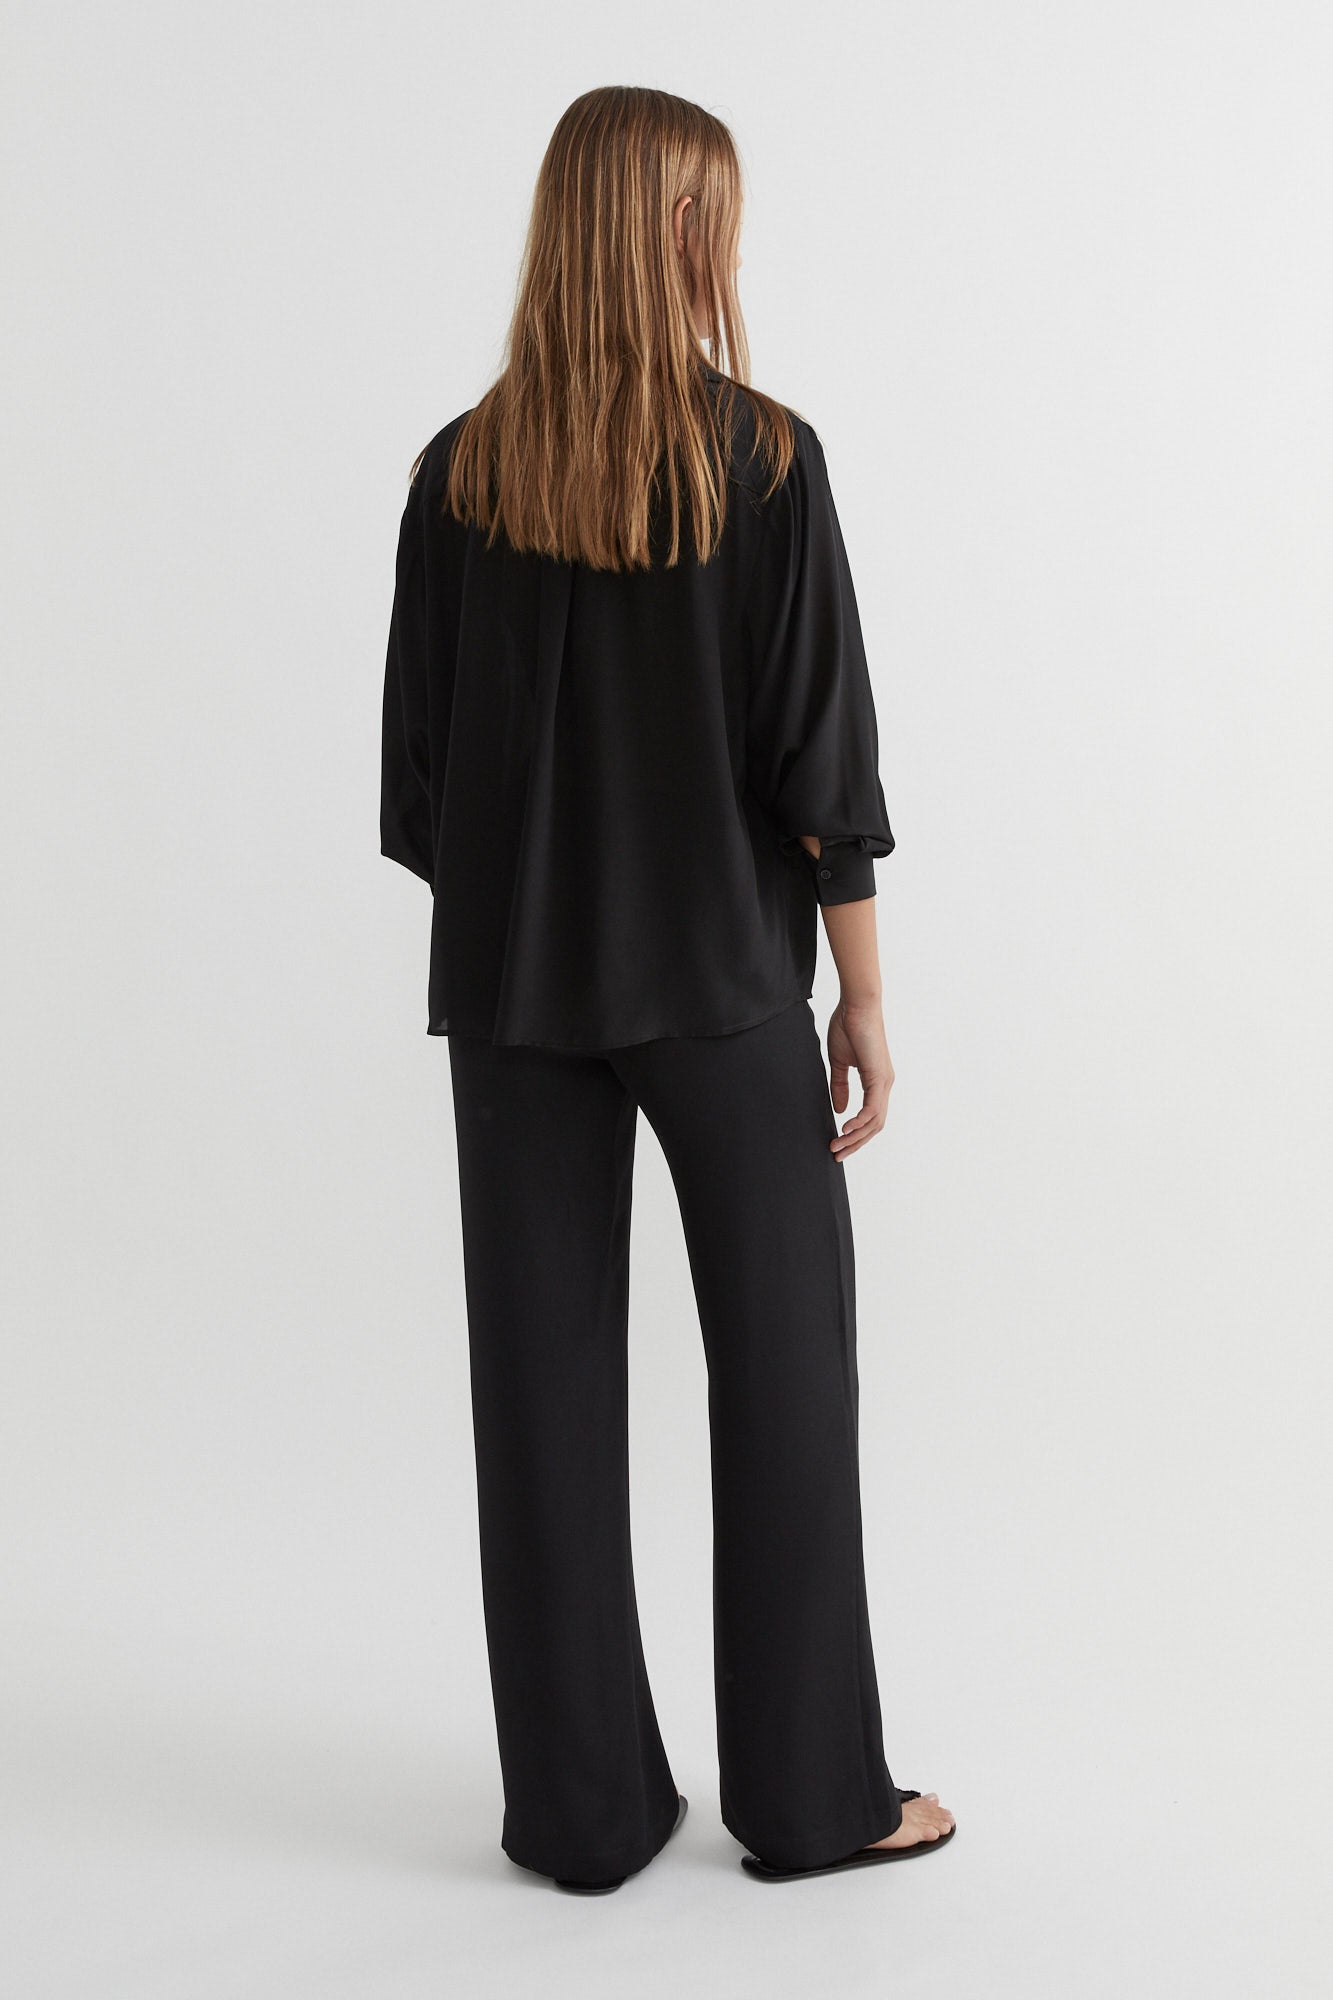 SAINT Lookbook Classic Silk Shirt in black silk crepe, long sleeve button up. Made in Australia